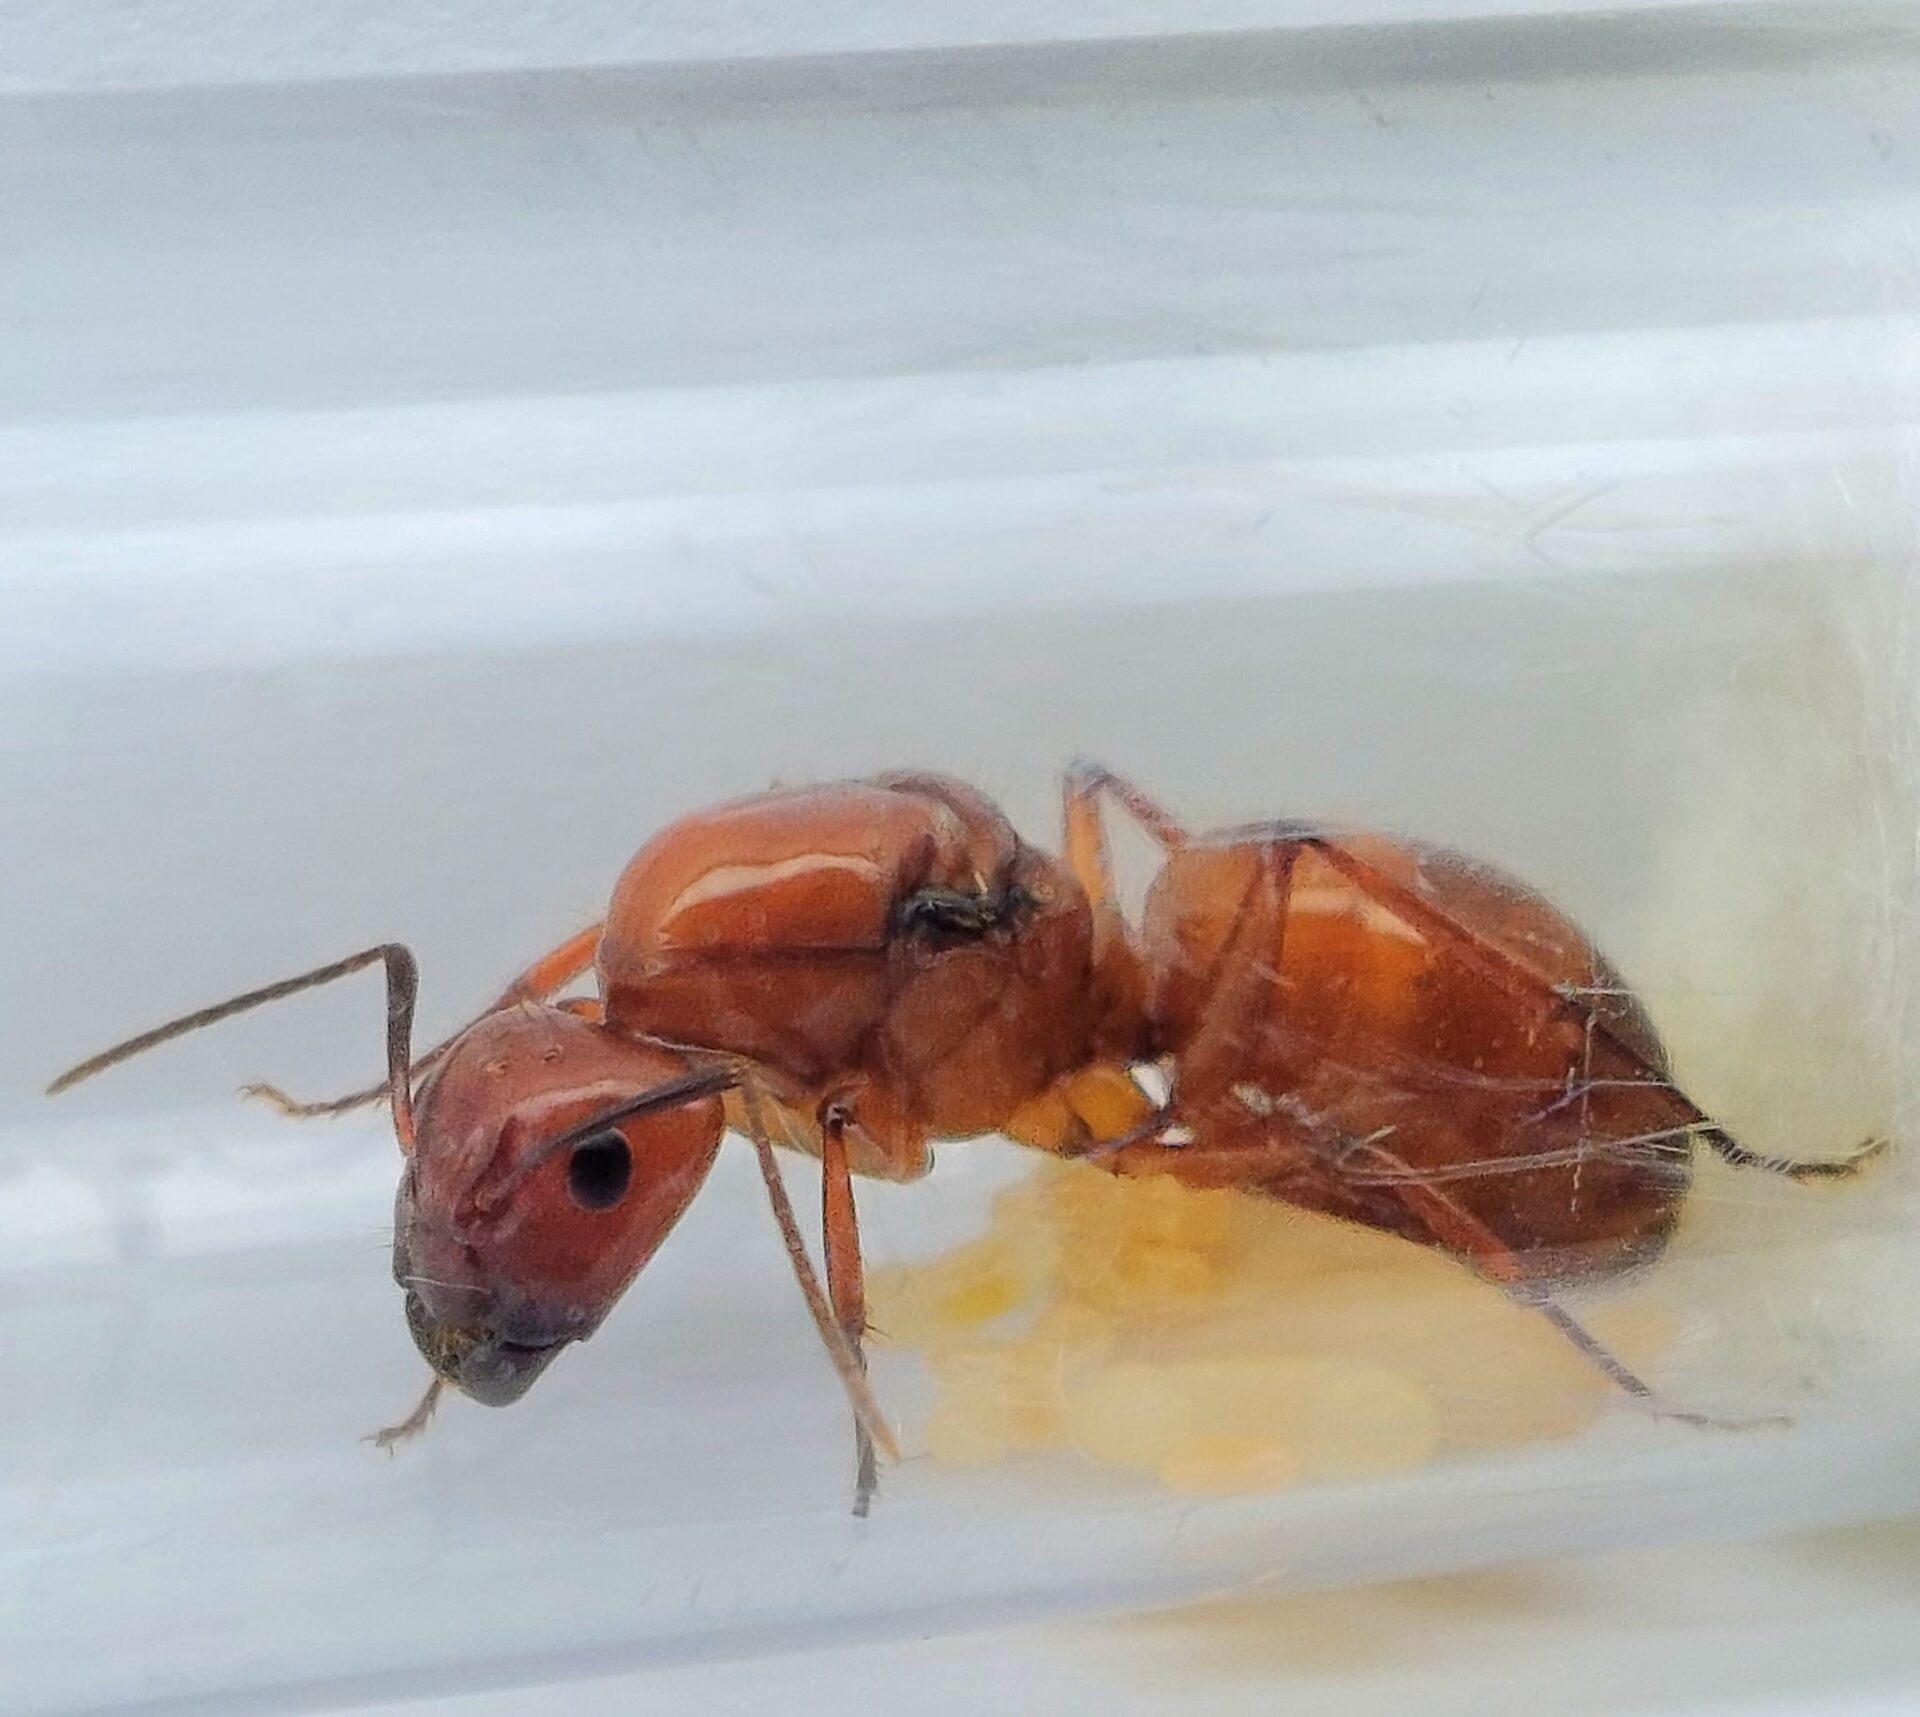 Camponotus castaneus